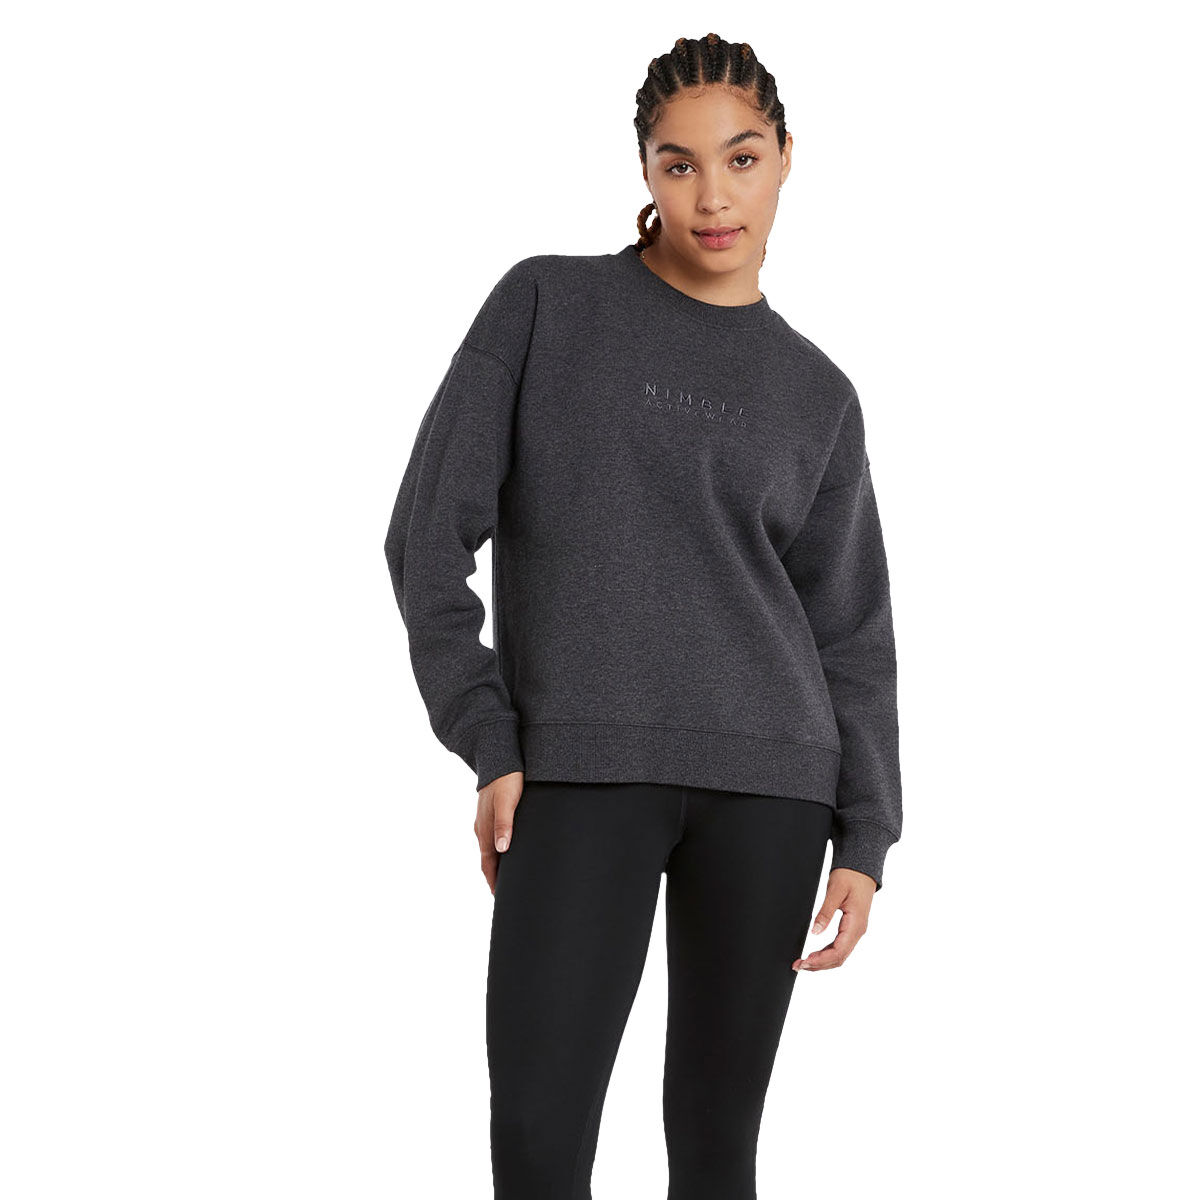 Multicolored XL Fever sweatshirt discount 69% WOMEN FASHION Jumpers & Sweatshirts Print 